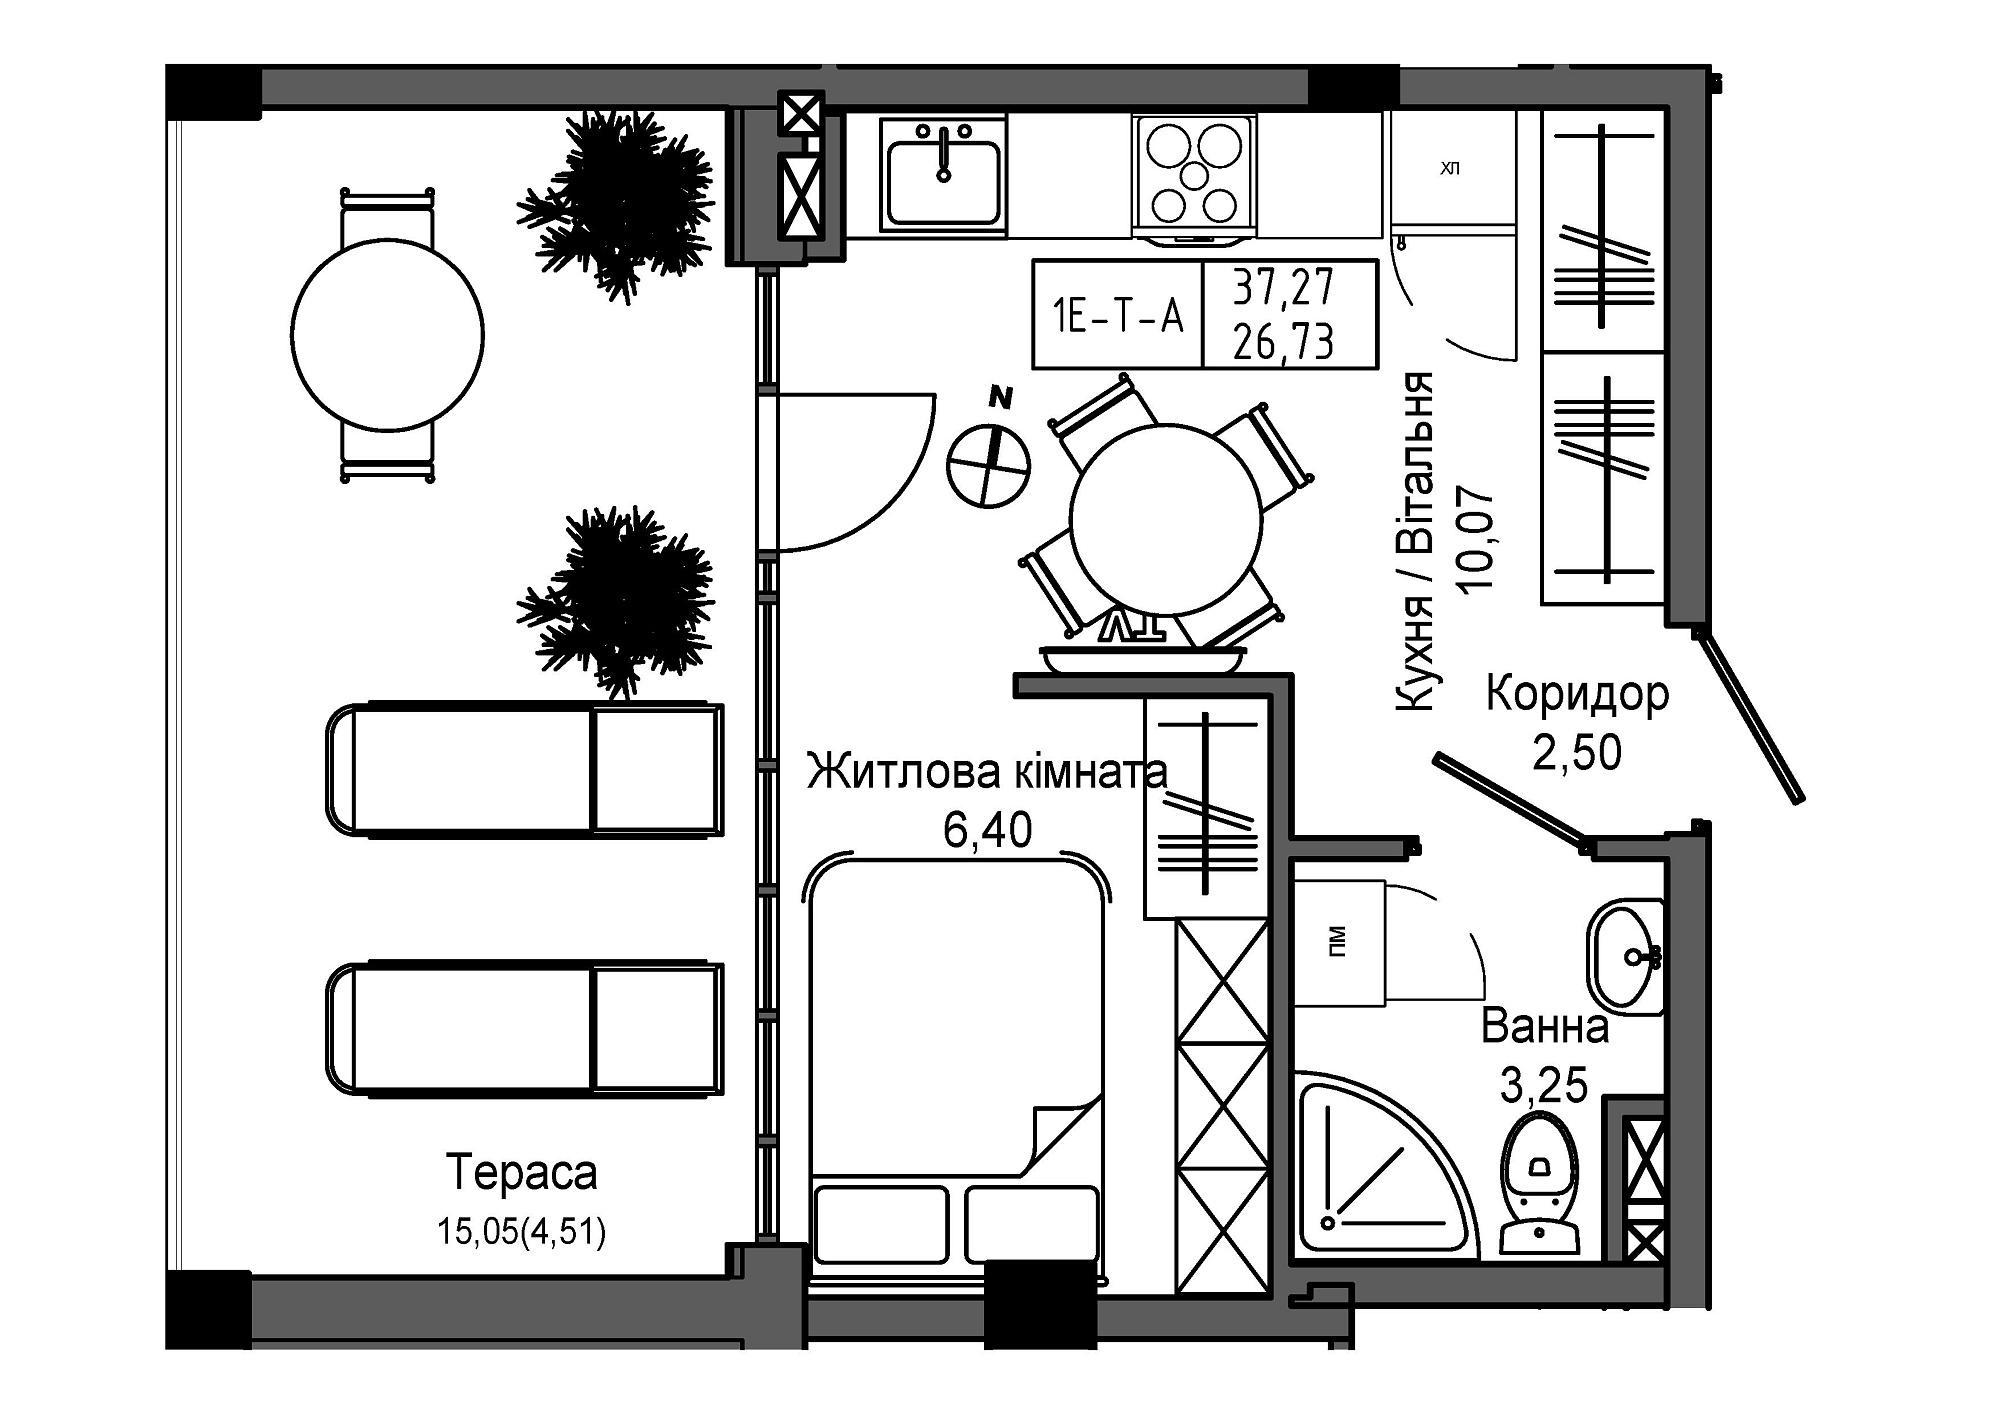 Планування 1-к квартира площею 26.73м2, UM-006-09/0017.